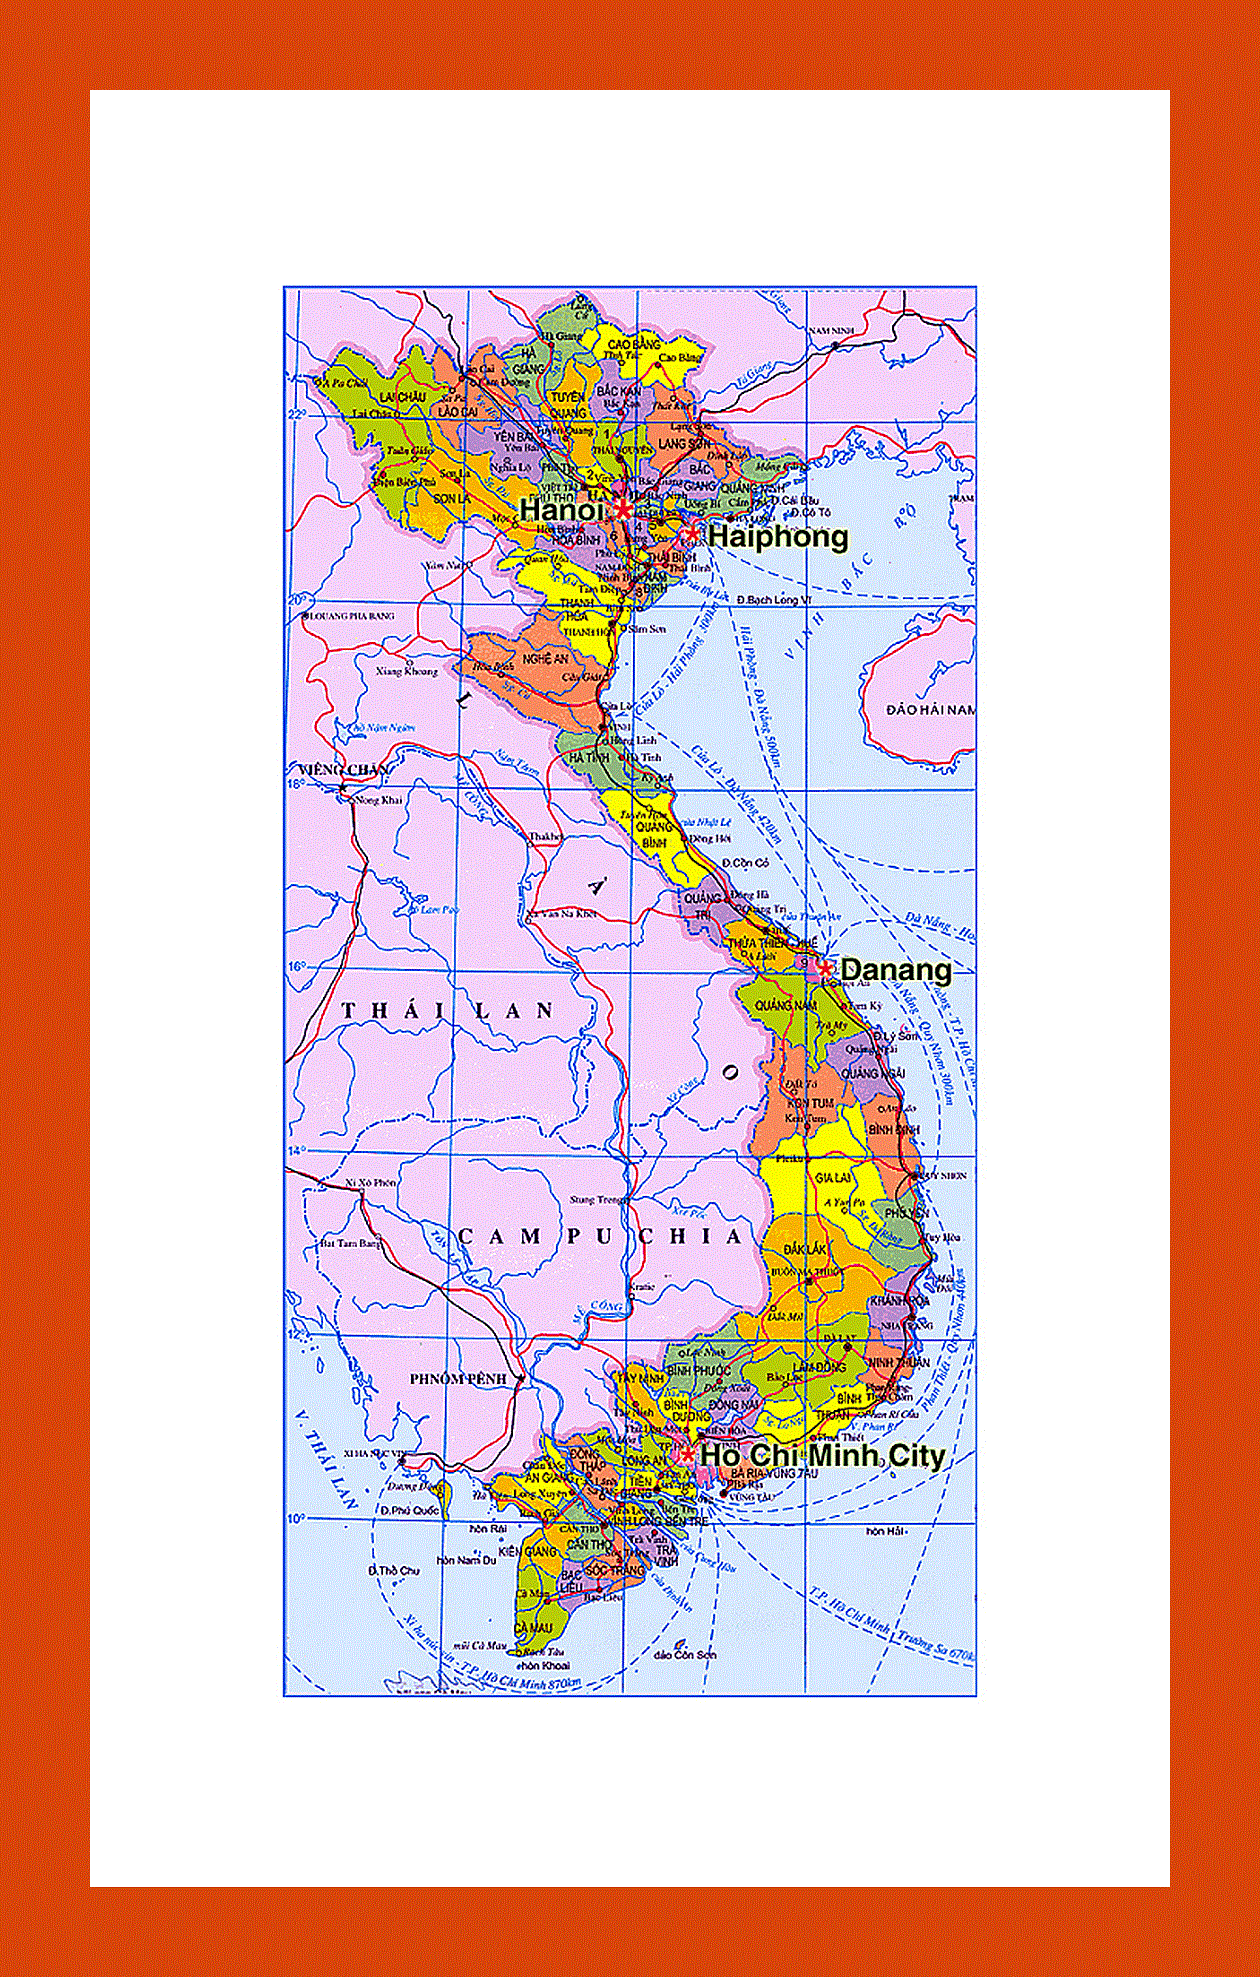 Administarative map of Vietnam